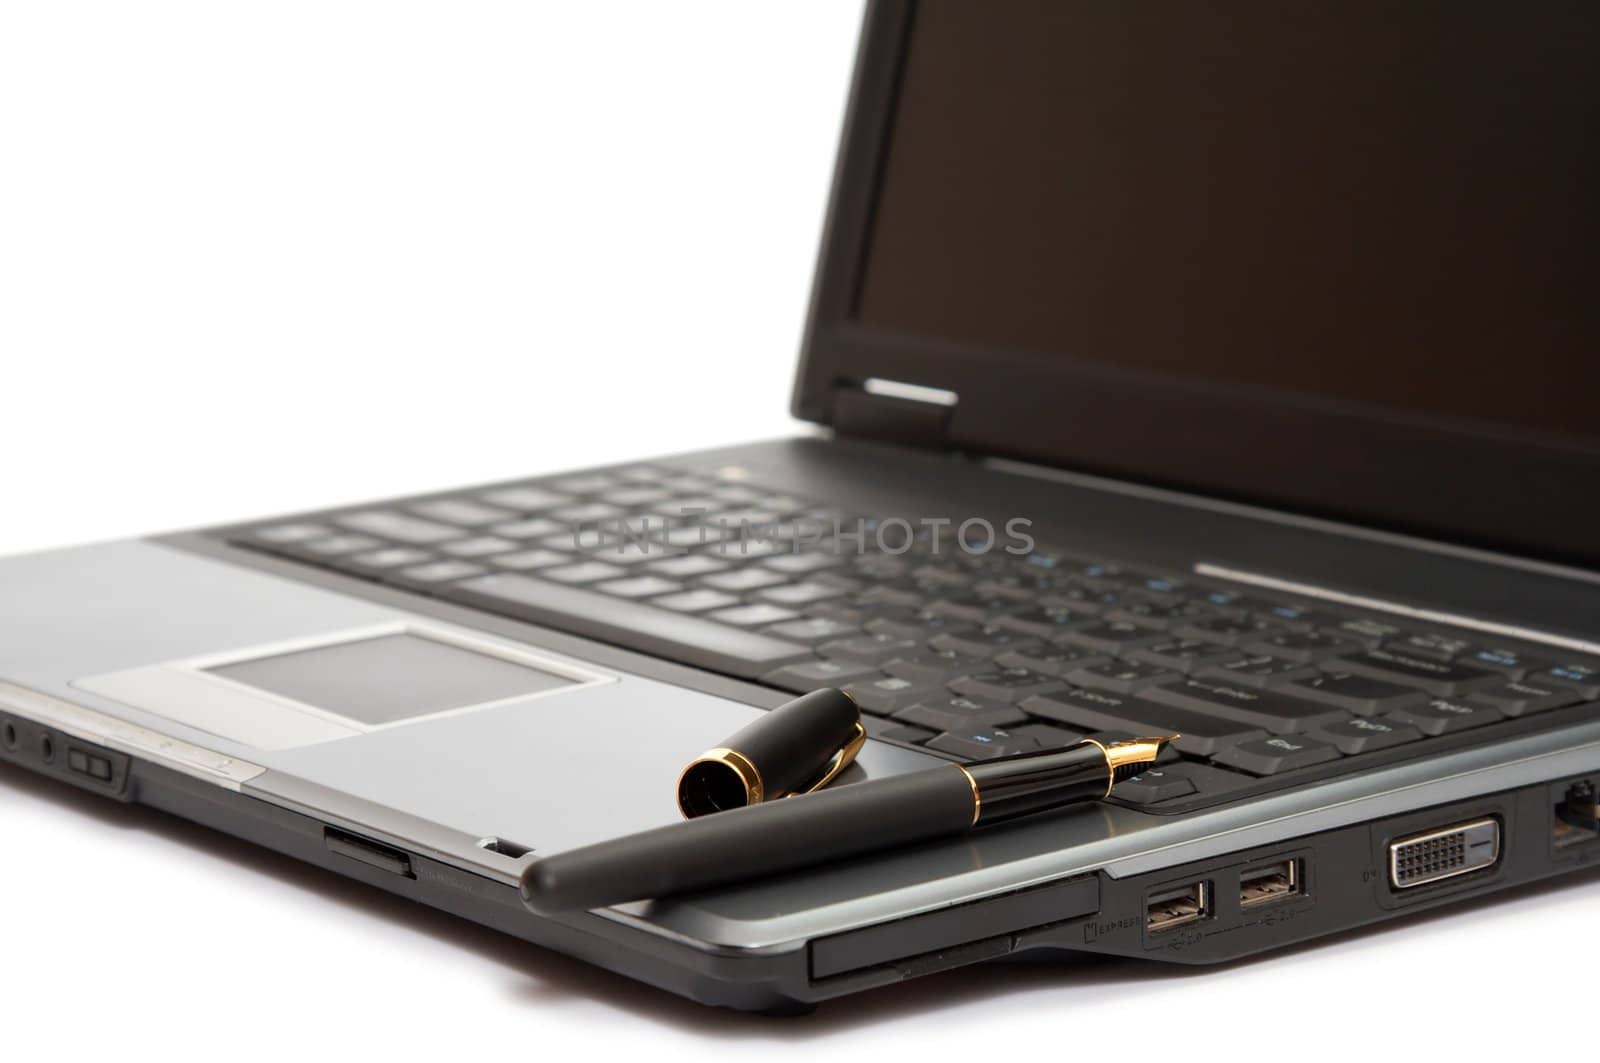 fountain pen on the laptop by zhu_zhu